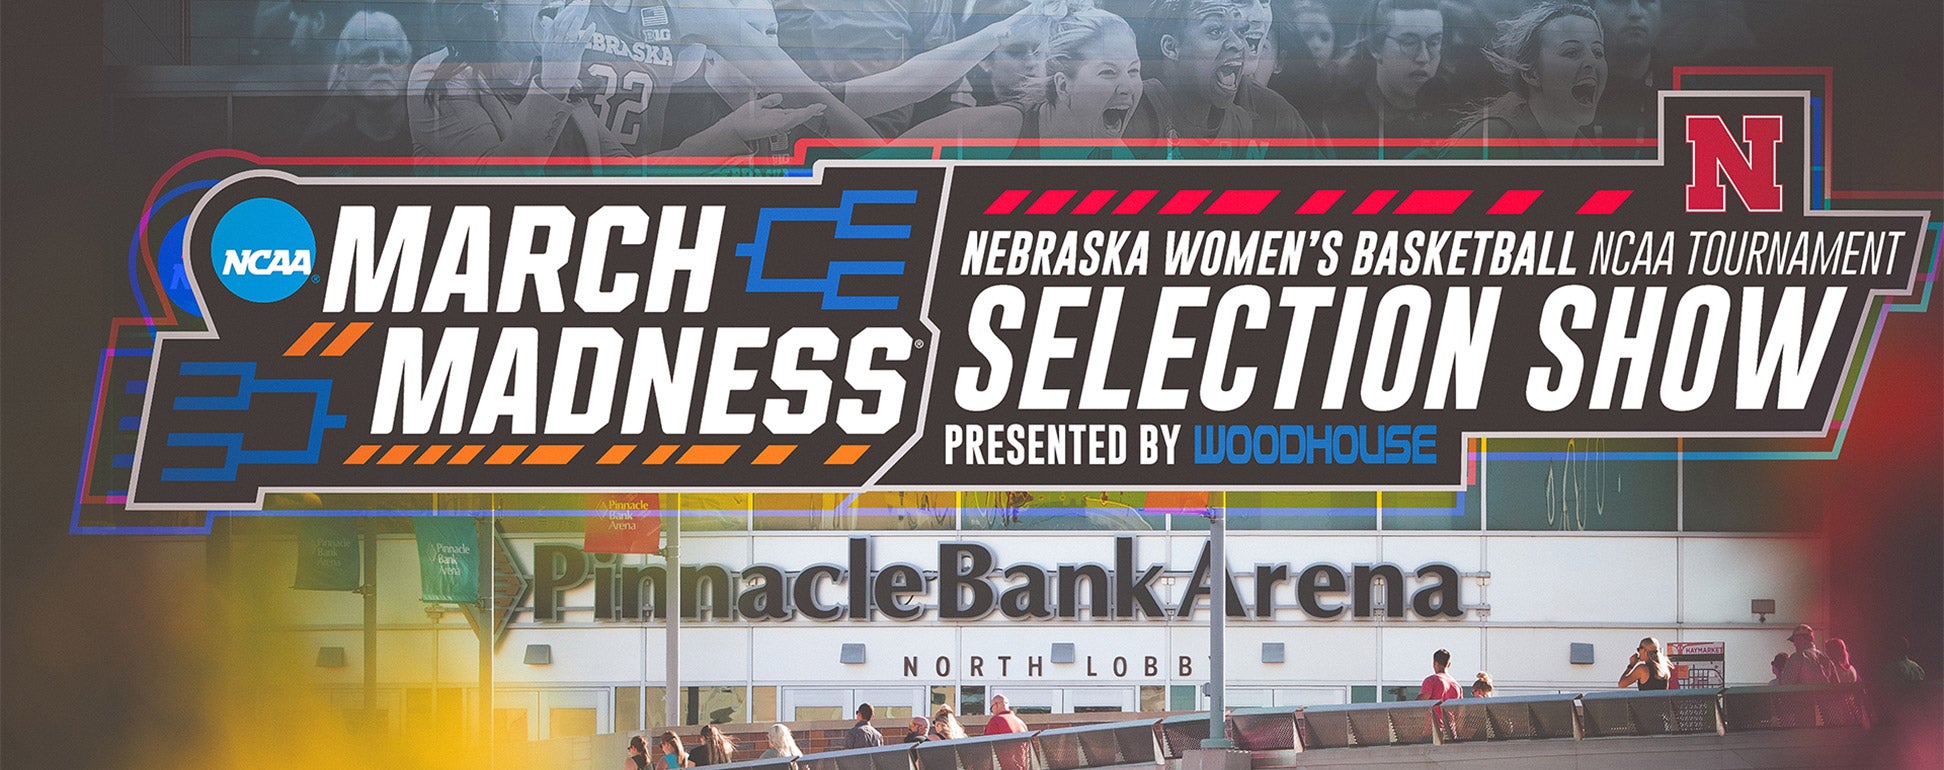 Women's Basketball NCAA Tournament Selection Show Pinnacle Bank Arena